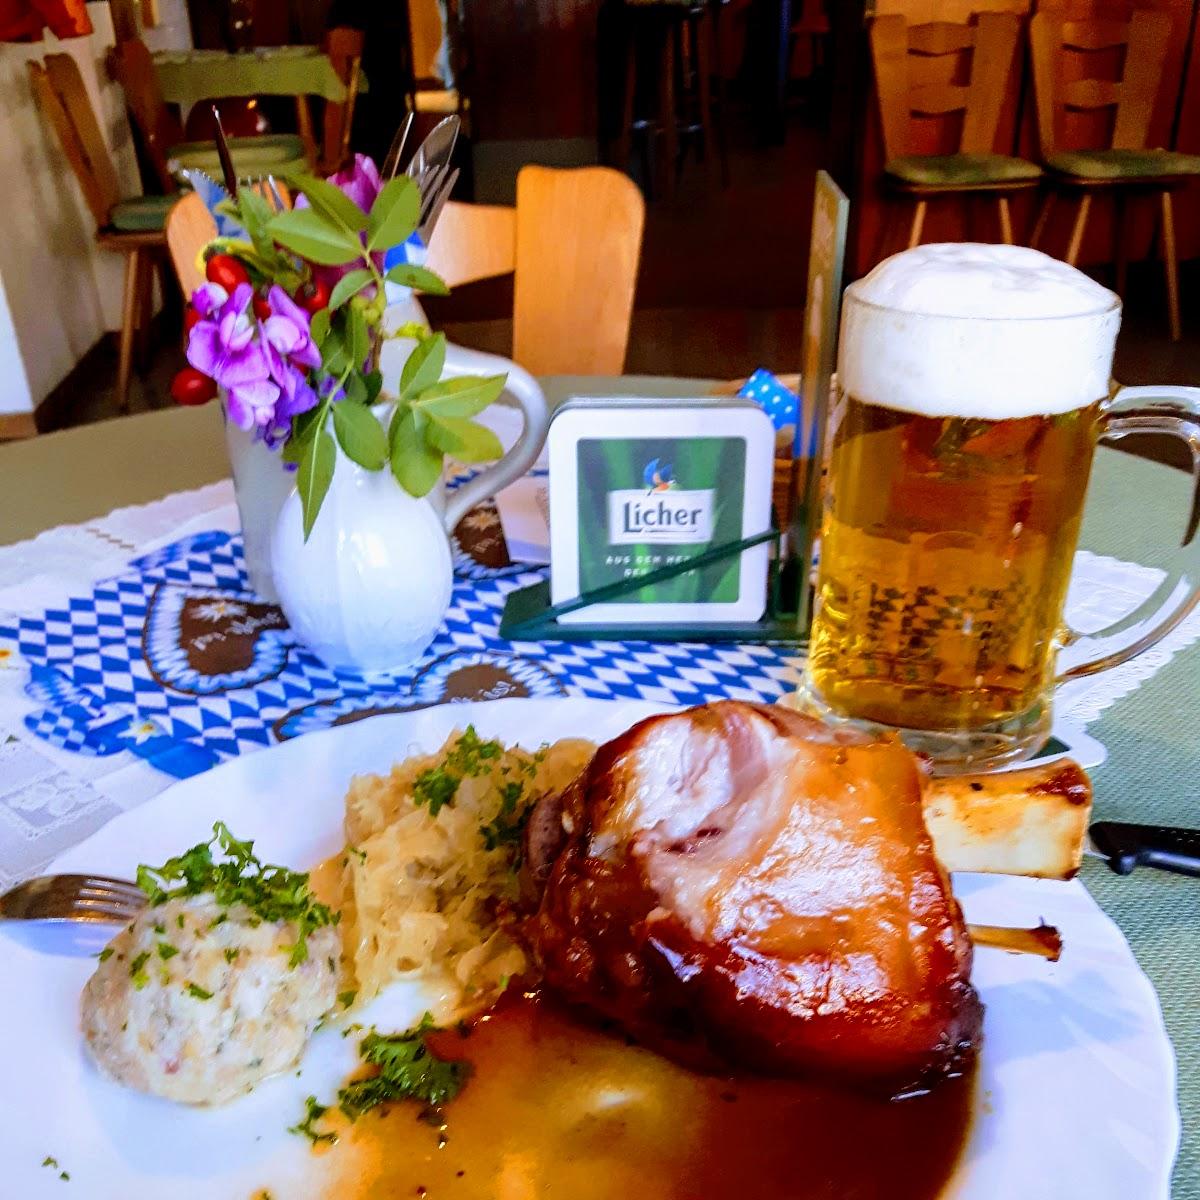 Restaurant "Goldener Hirsch" in Ober-Mörlen